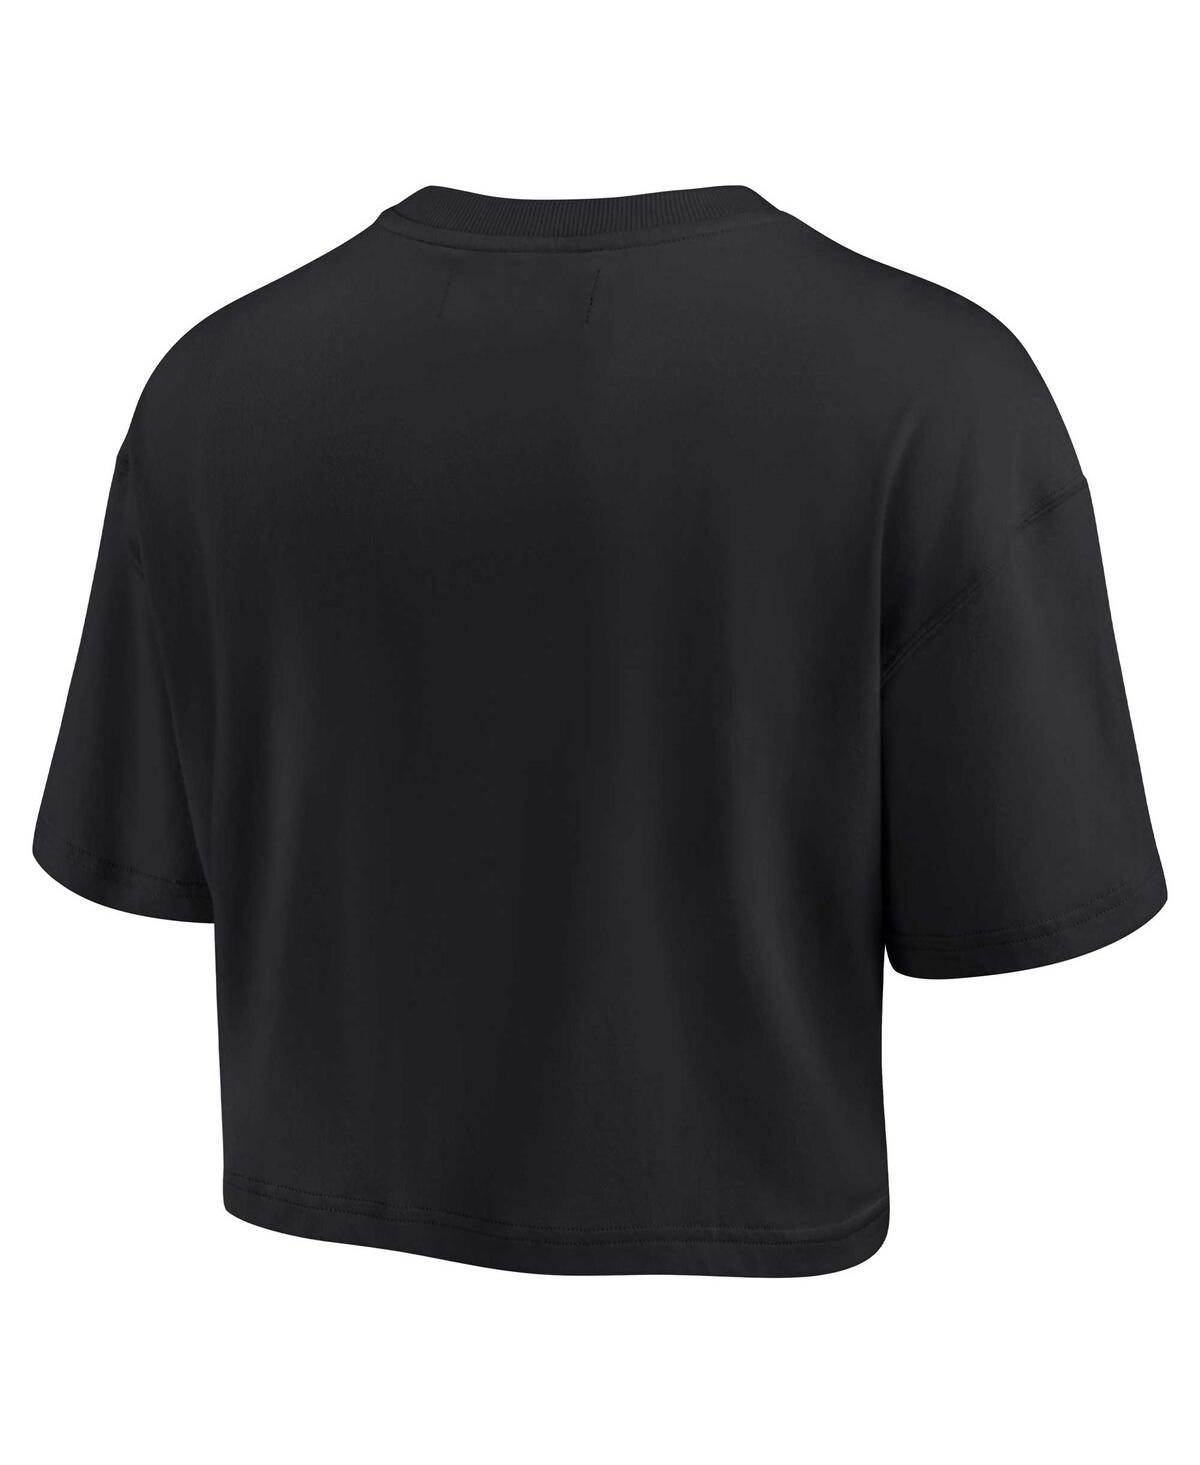 Shop Fanatics Signature Women's  Black Los Angeles Lakers Super Soft Boxy Cropped T-shirt